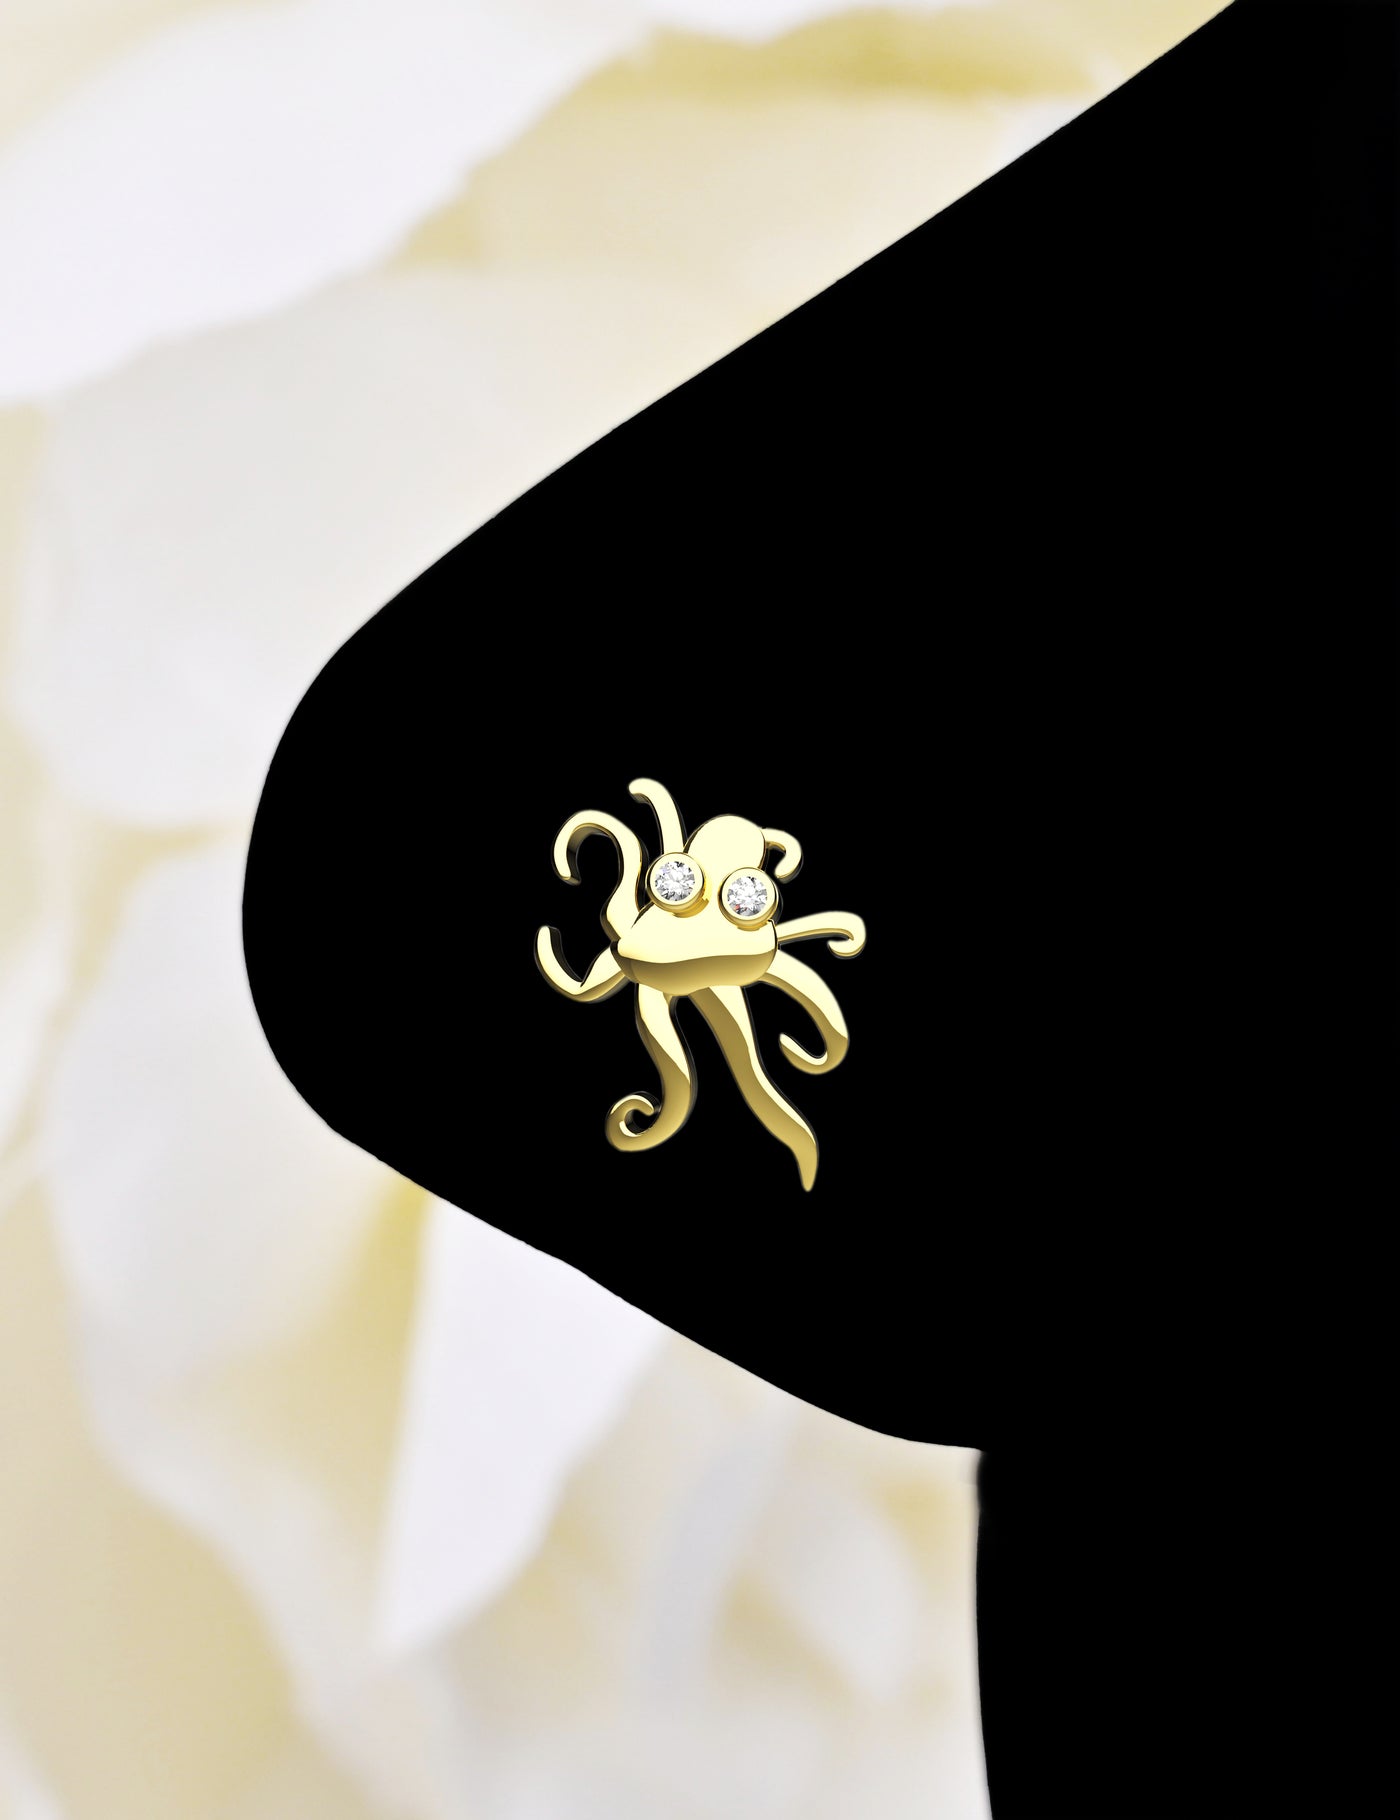 14ct Gold Plating CZ Octopus Nose Stud